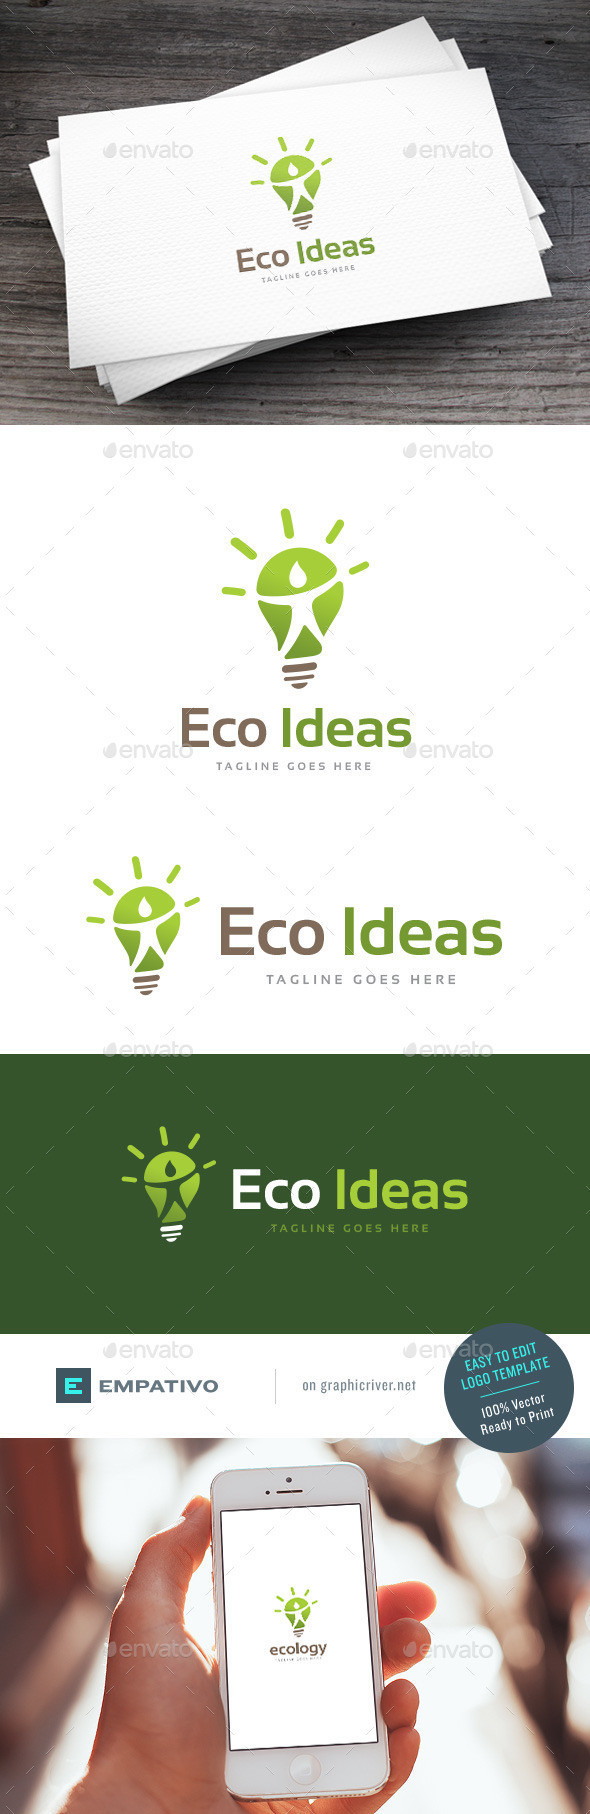 Eco ideas logo template